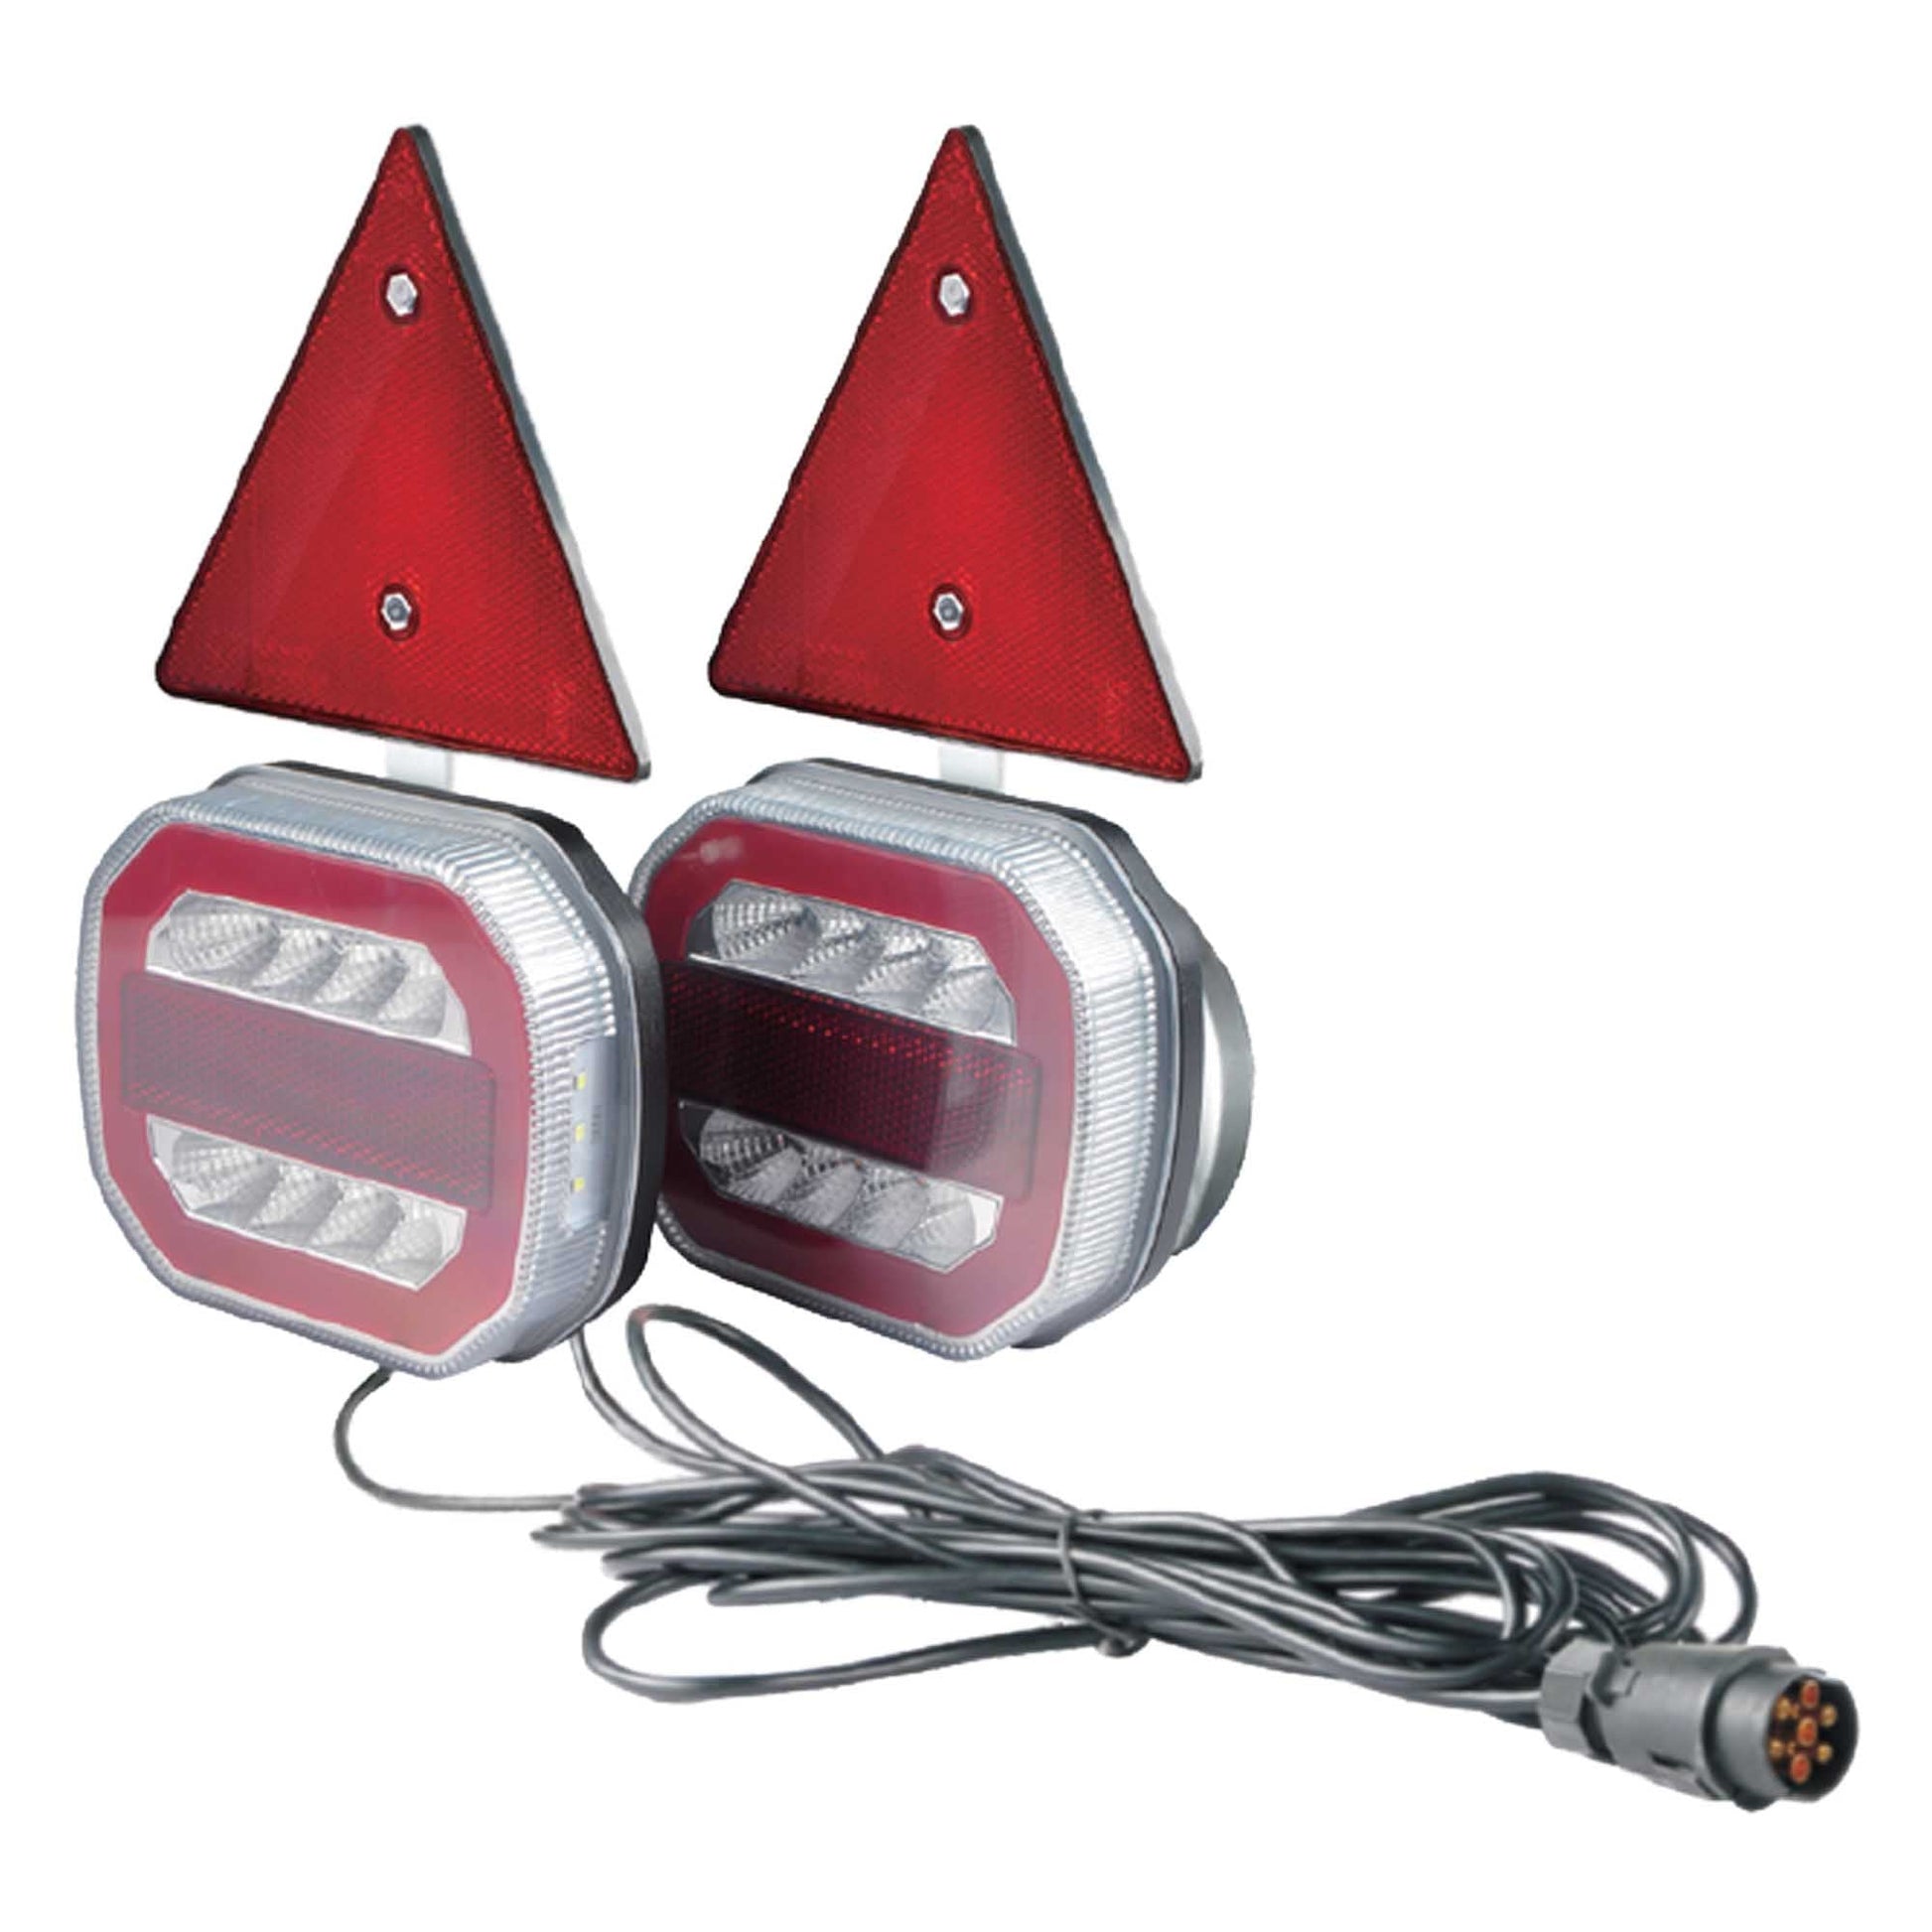 Anhänger LED Rückleuchten - Multifunktionsleuchten - Set, LED Rückleuchten, Rückleuchten, Beleuchtung und Elektrik, Anhänger Ersatzteile